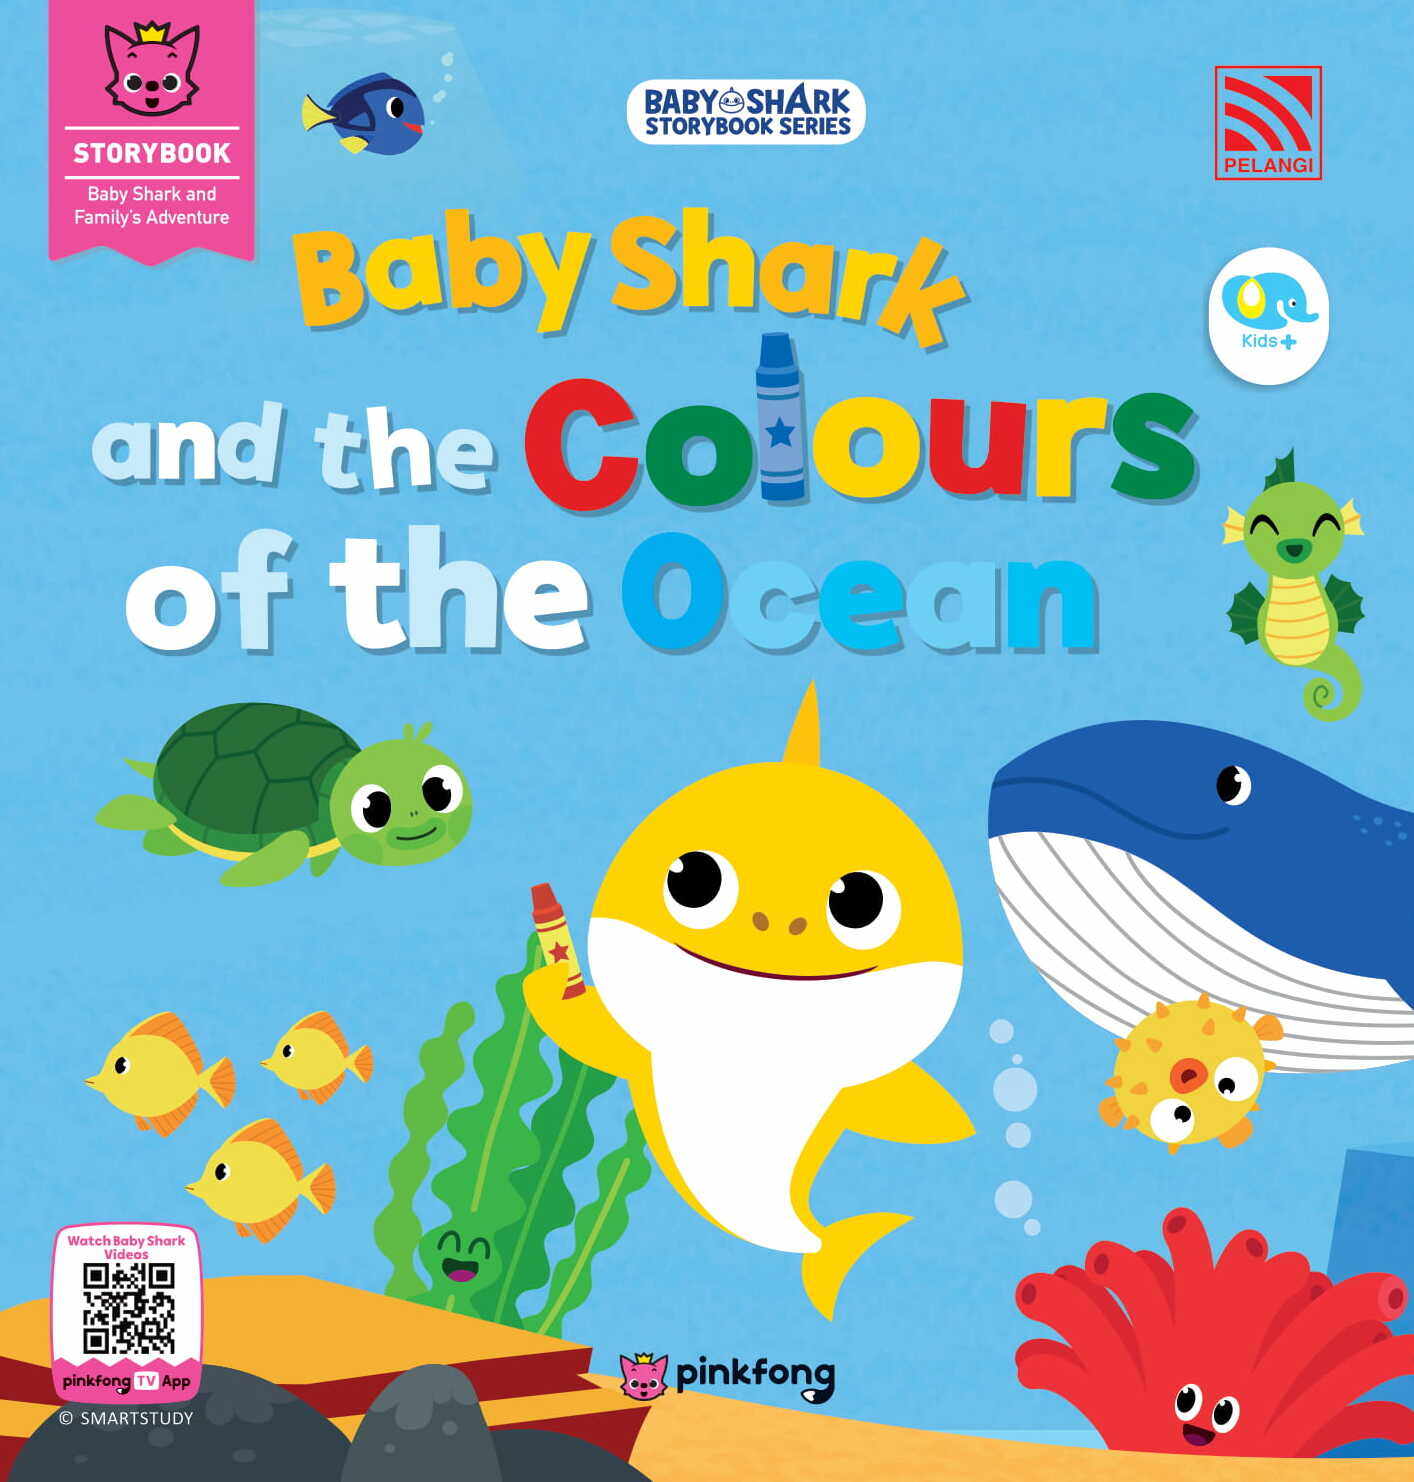 Pelangibooks Baby Shark Storybook Series